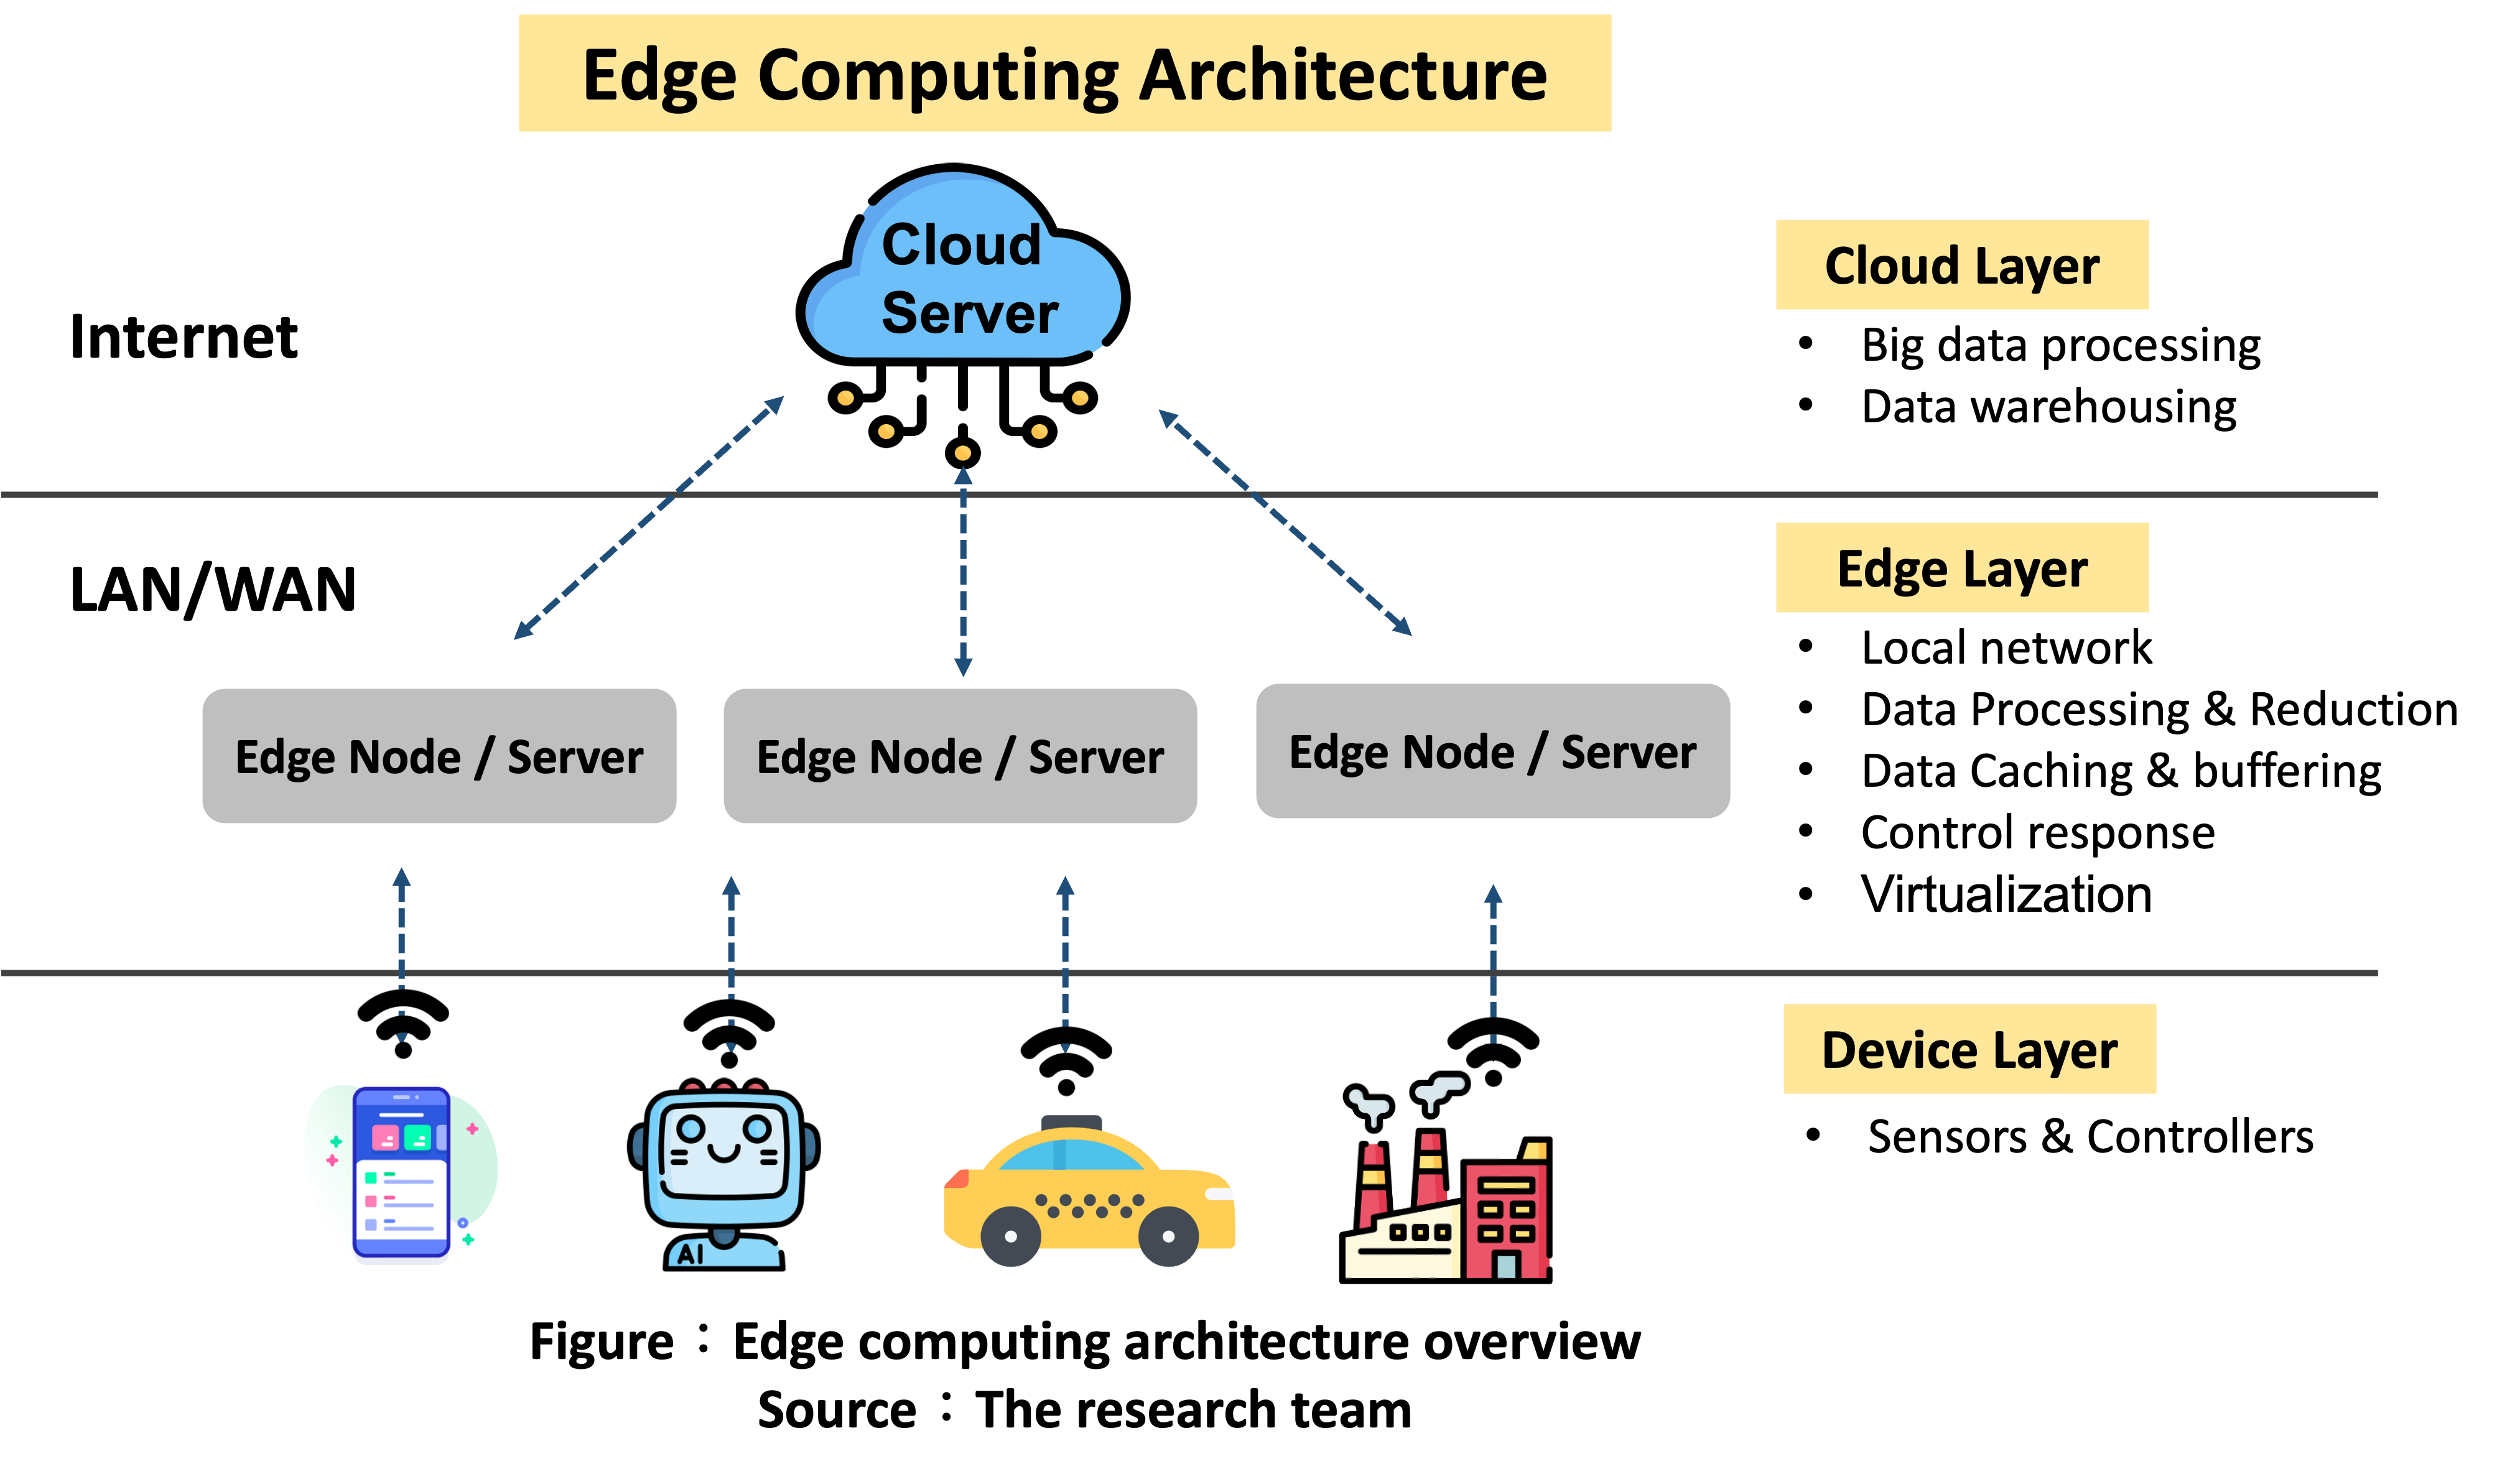 Edge Computing Architecture Overview